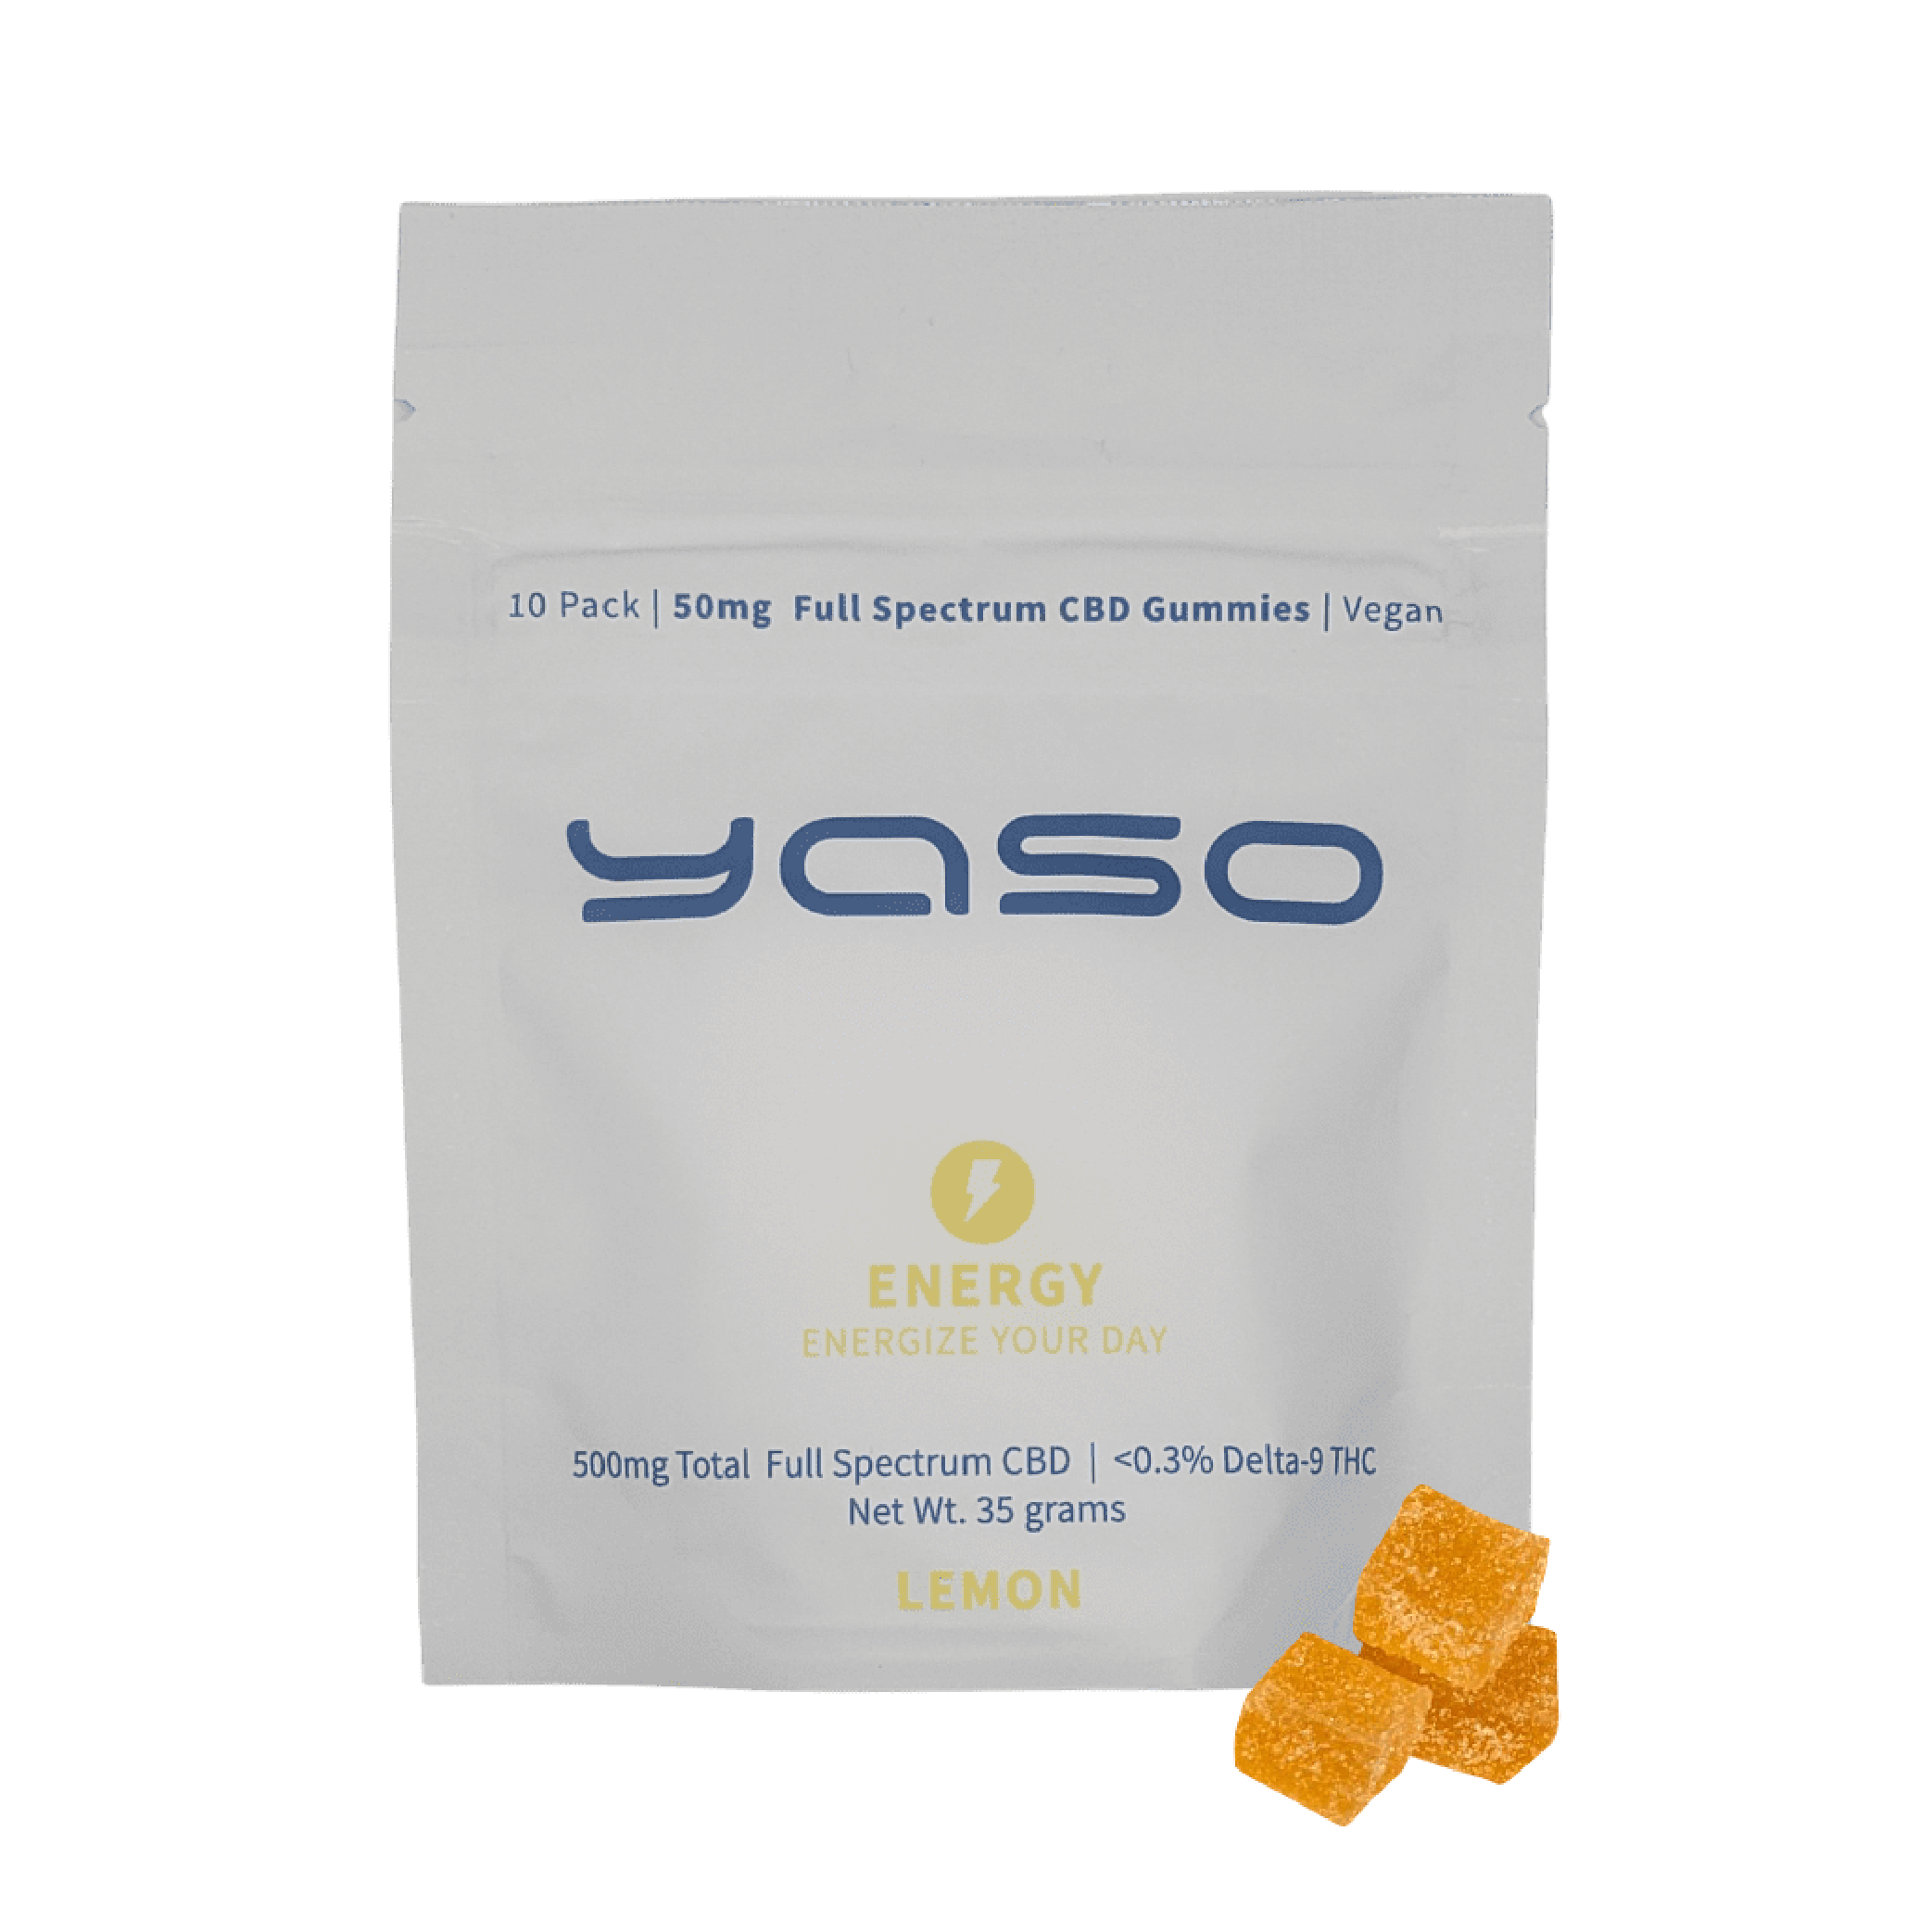 Yaso Energy CBD Gummies